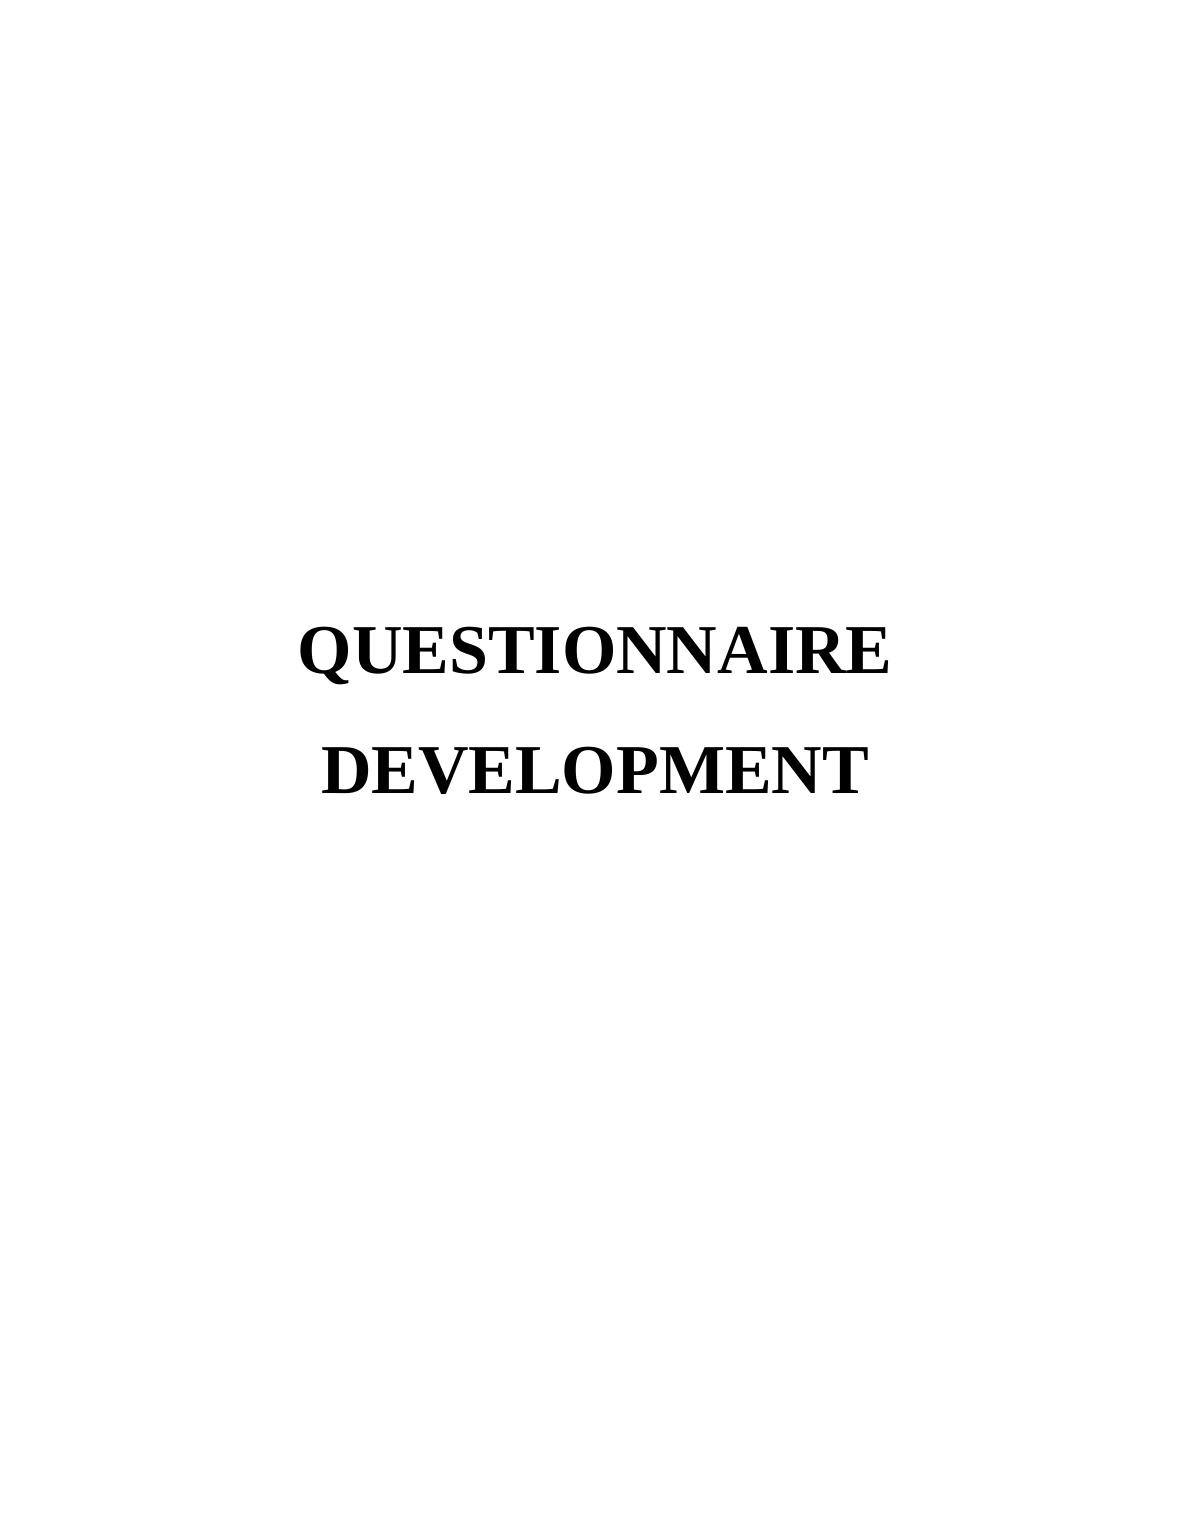 Questionnaire Design Assignment_1